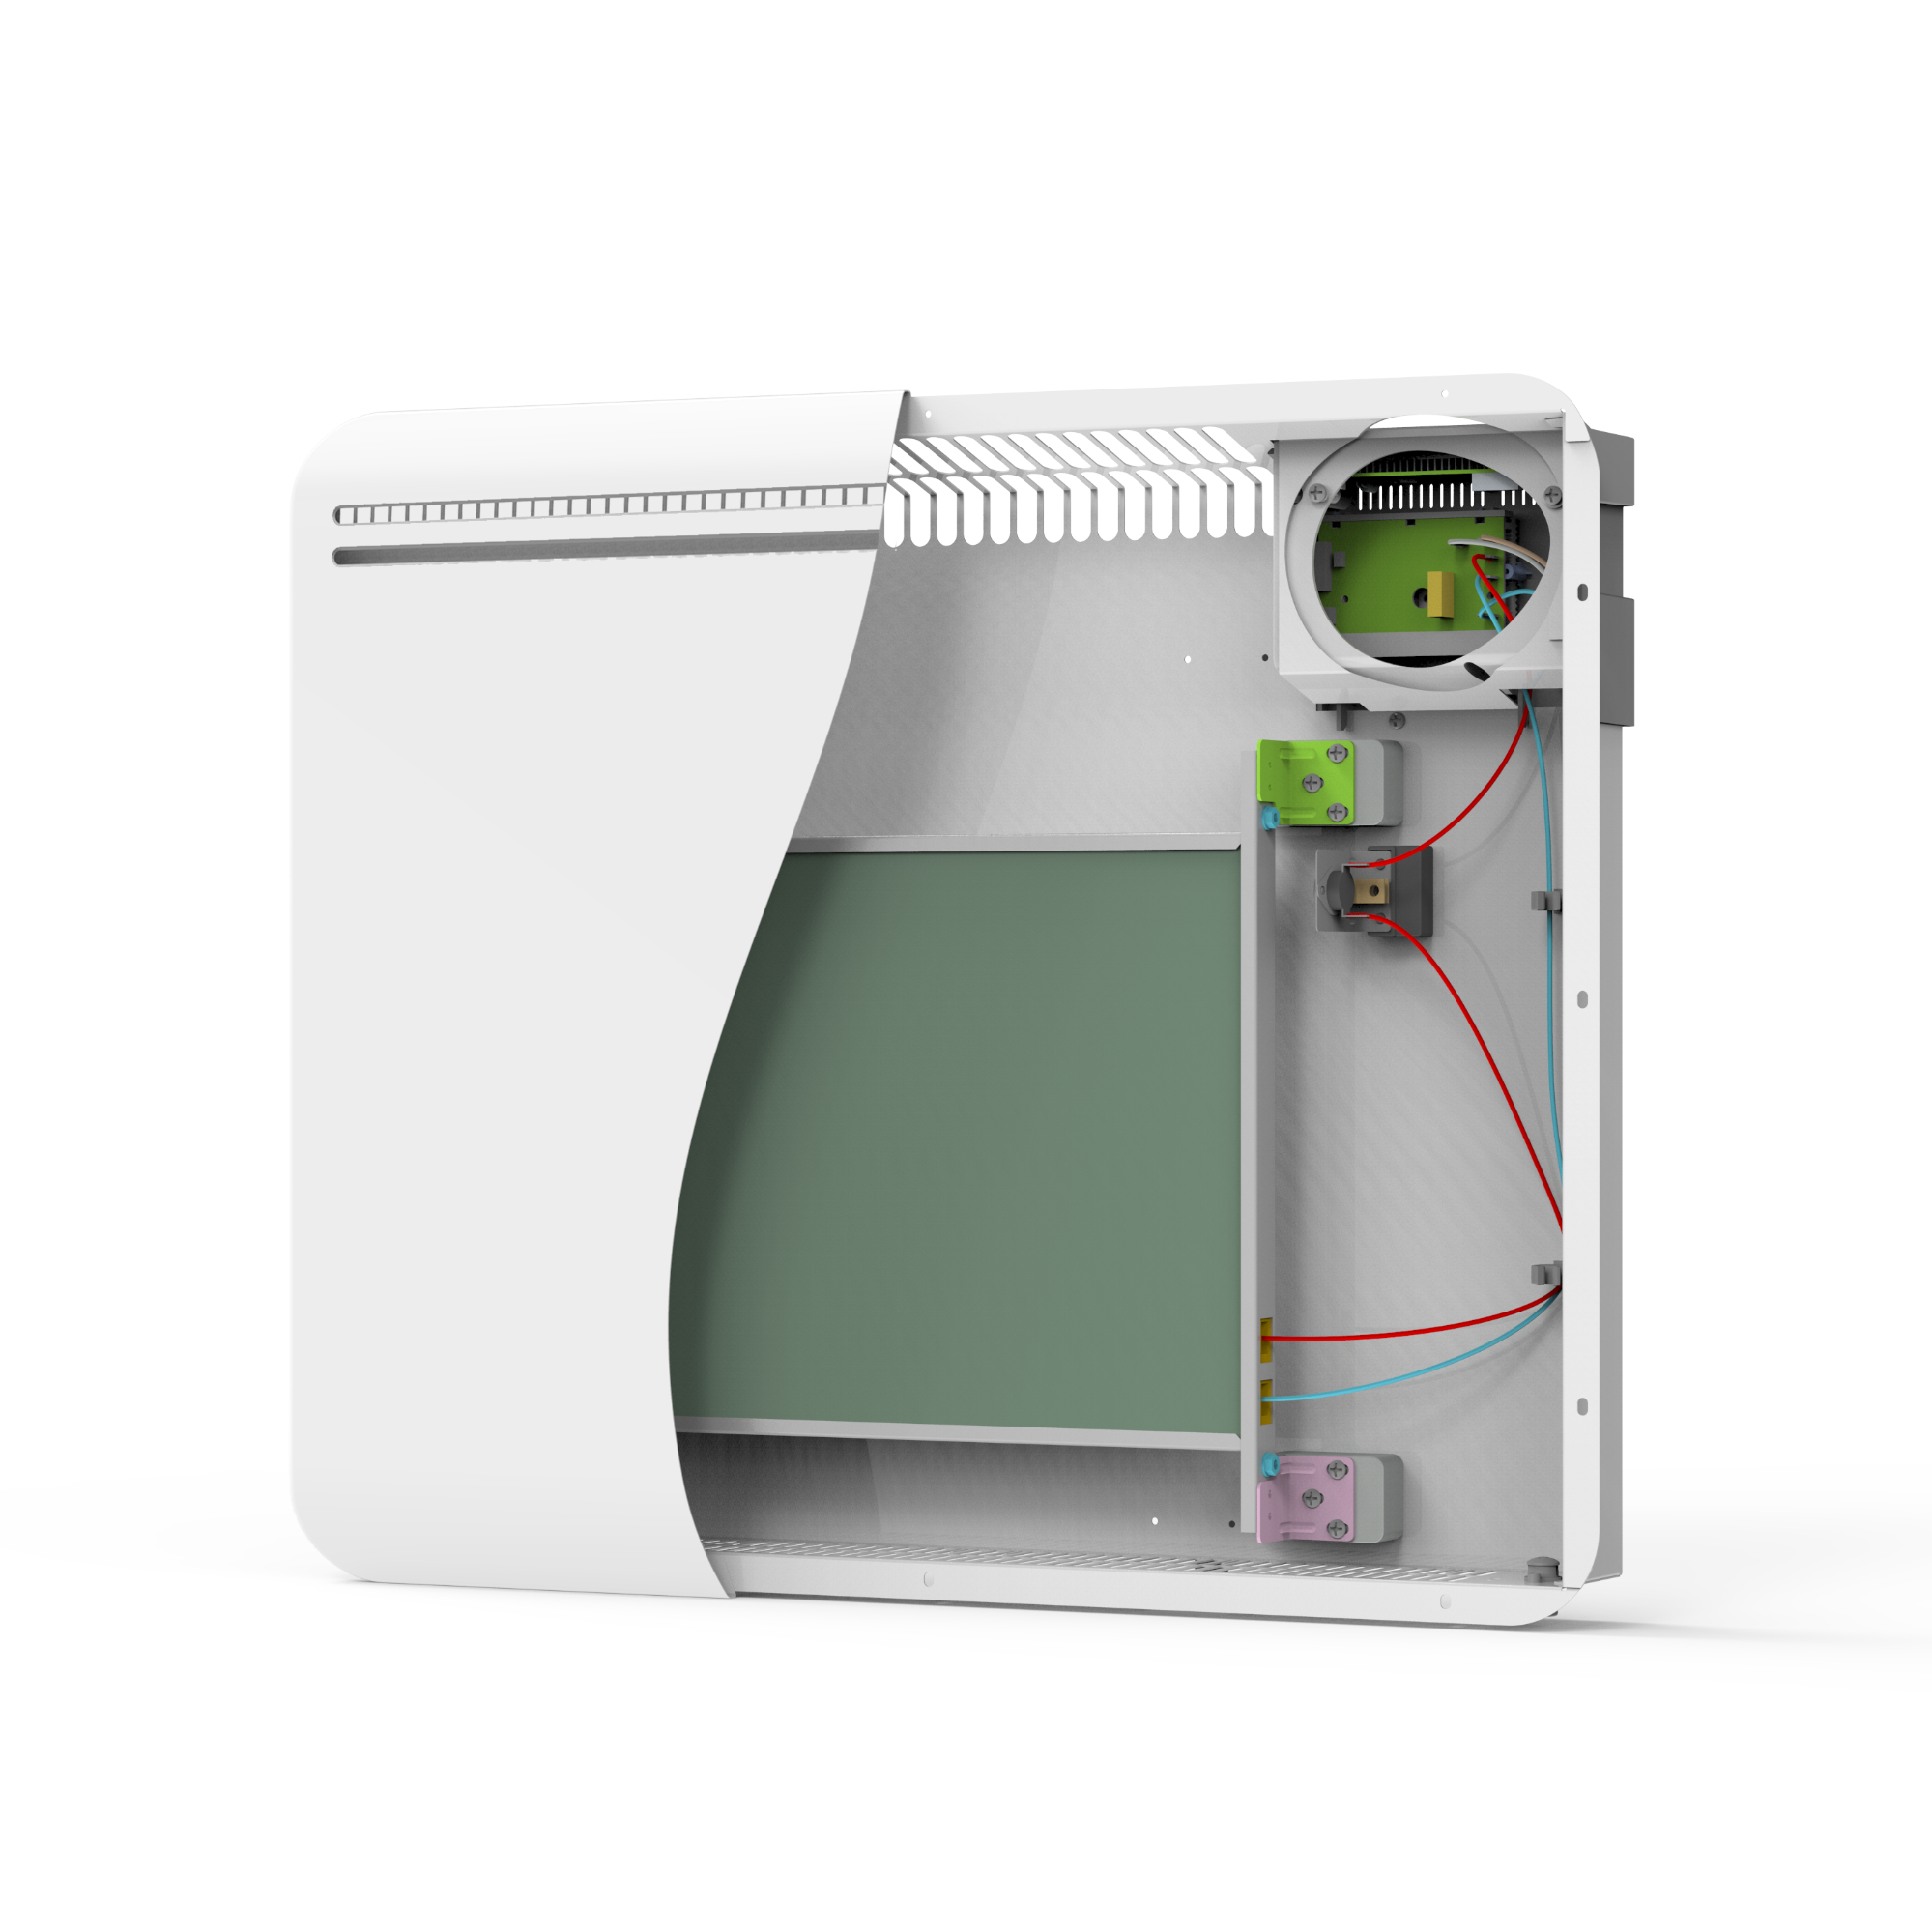 Radiateur à inertie fonte 1500W écran digital Eco Design NF